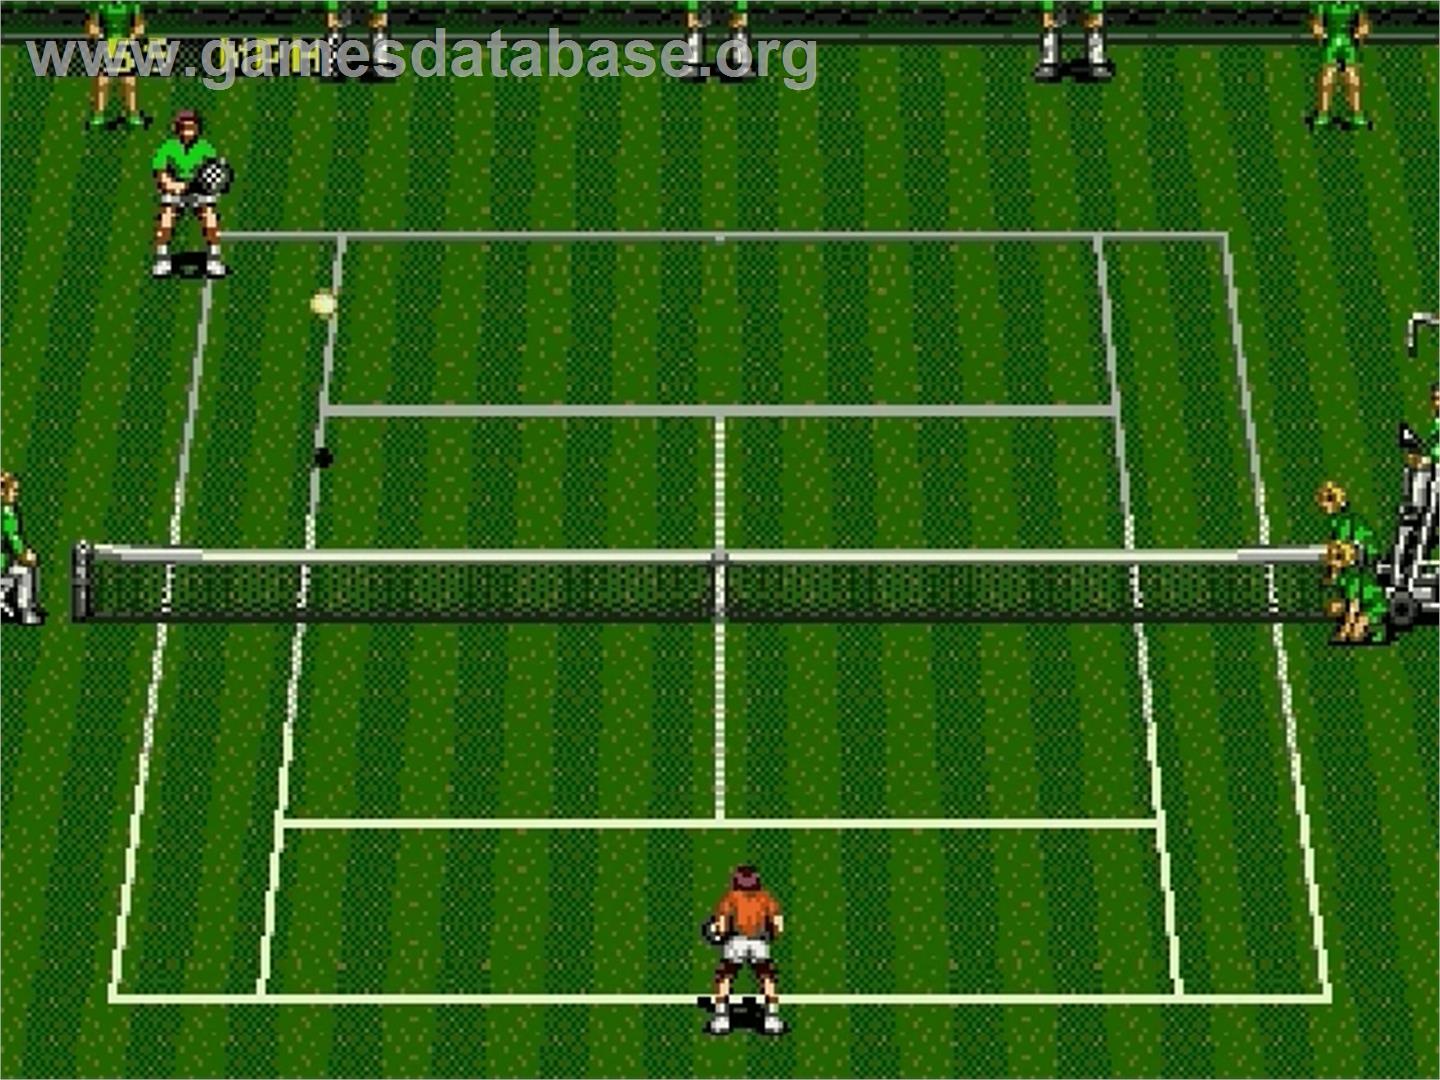 ATP Tour Championship Tennis - Sega Genesis - Artwork - In Game